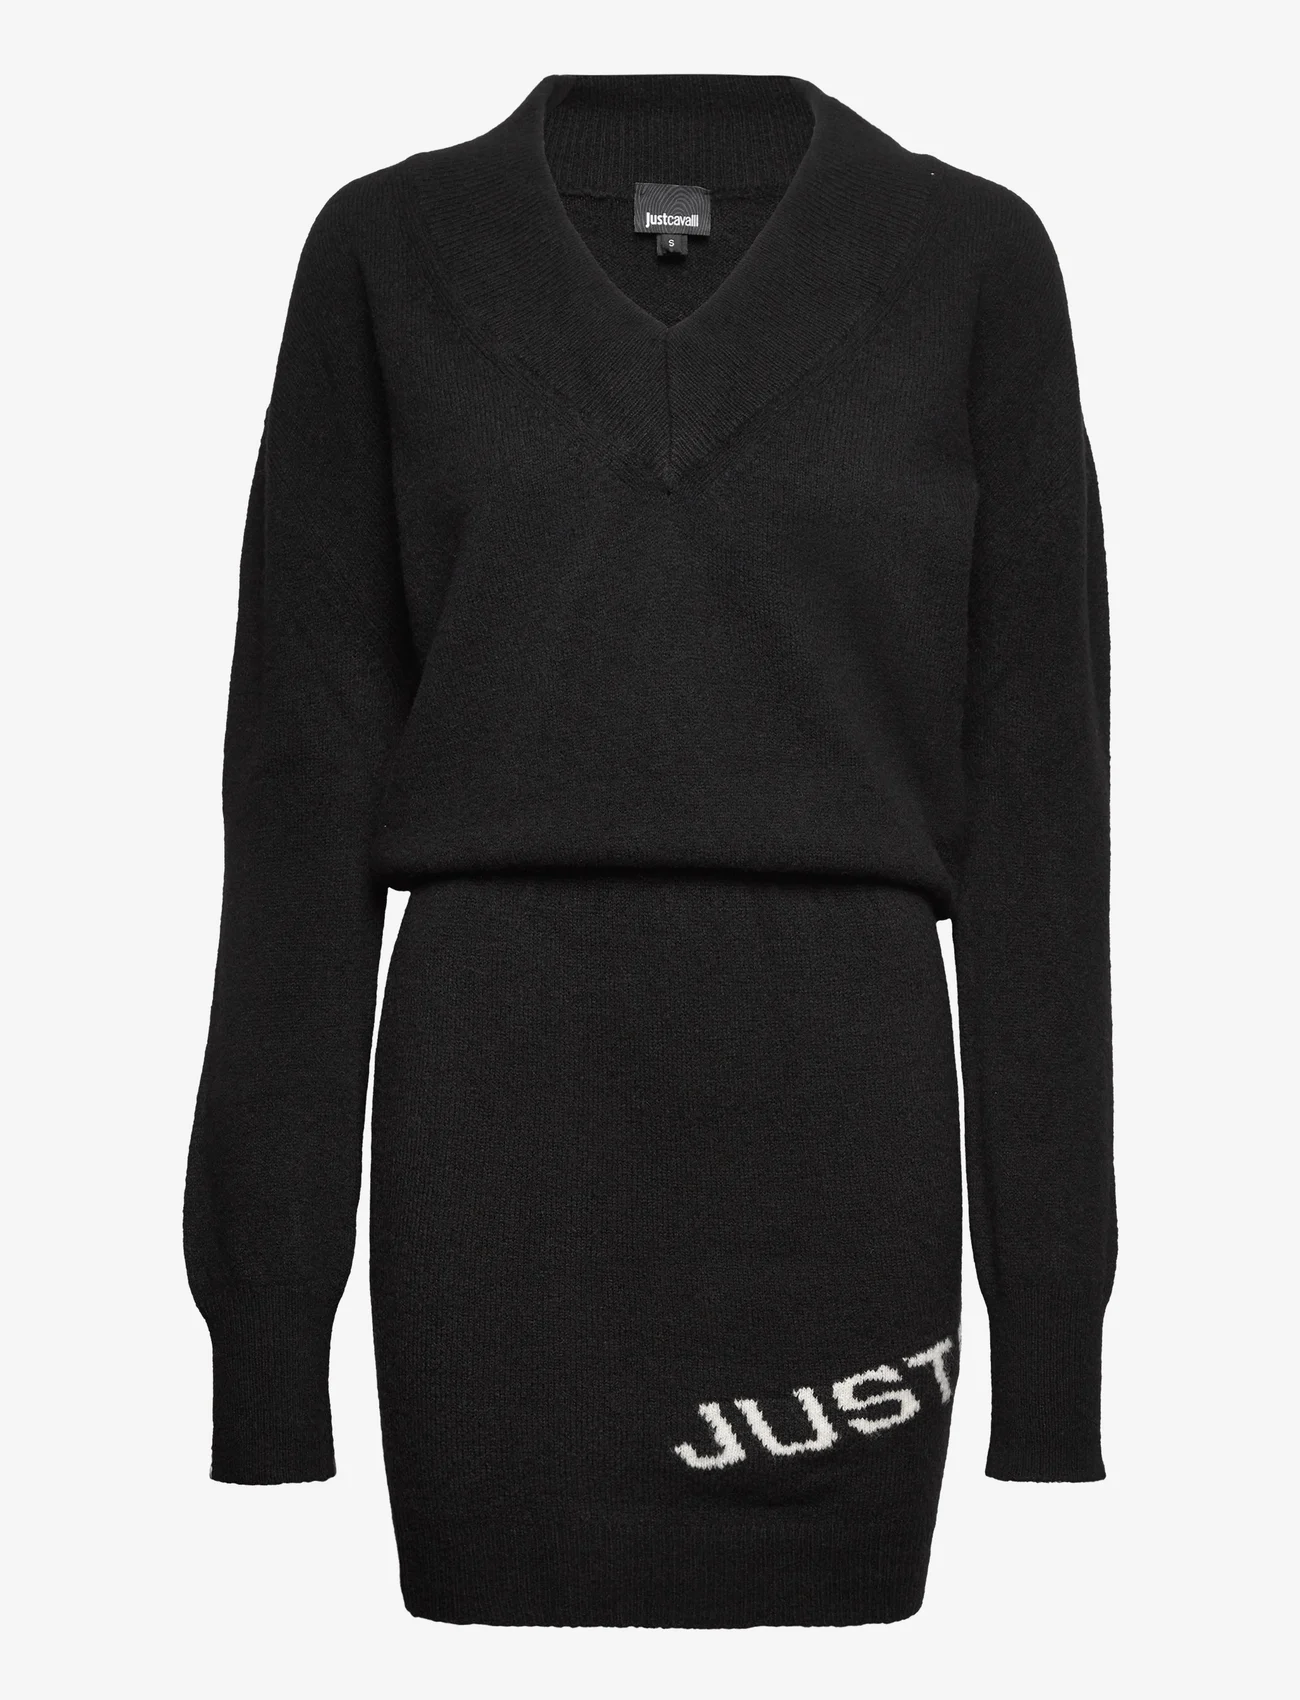 Just Cavalli - DRESS - knitted dresses - black jacquard - 0